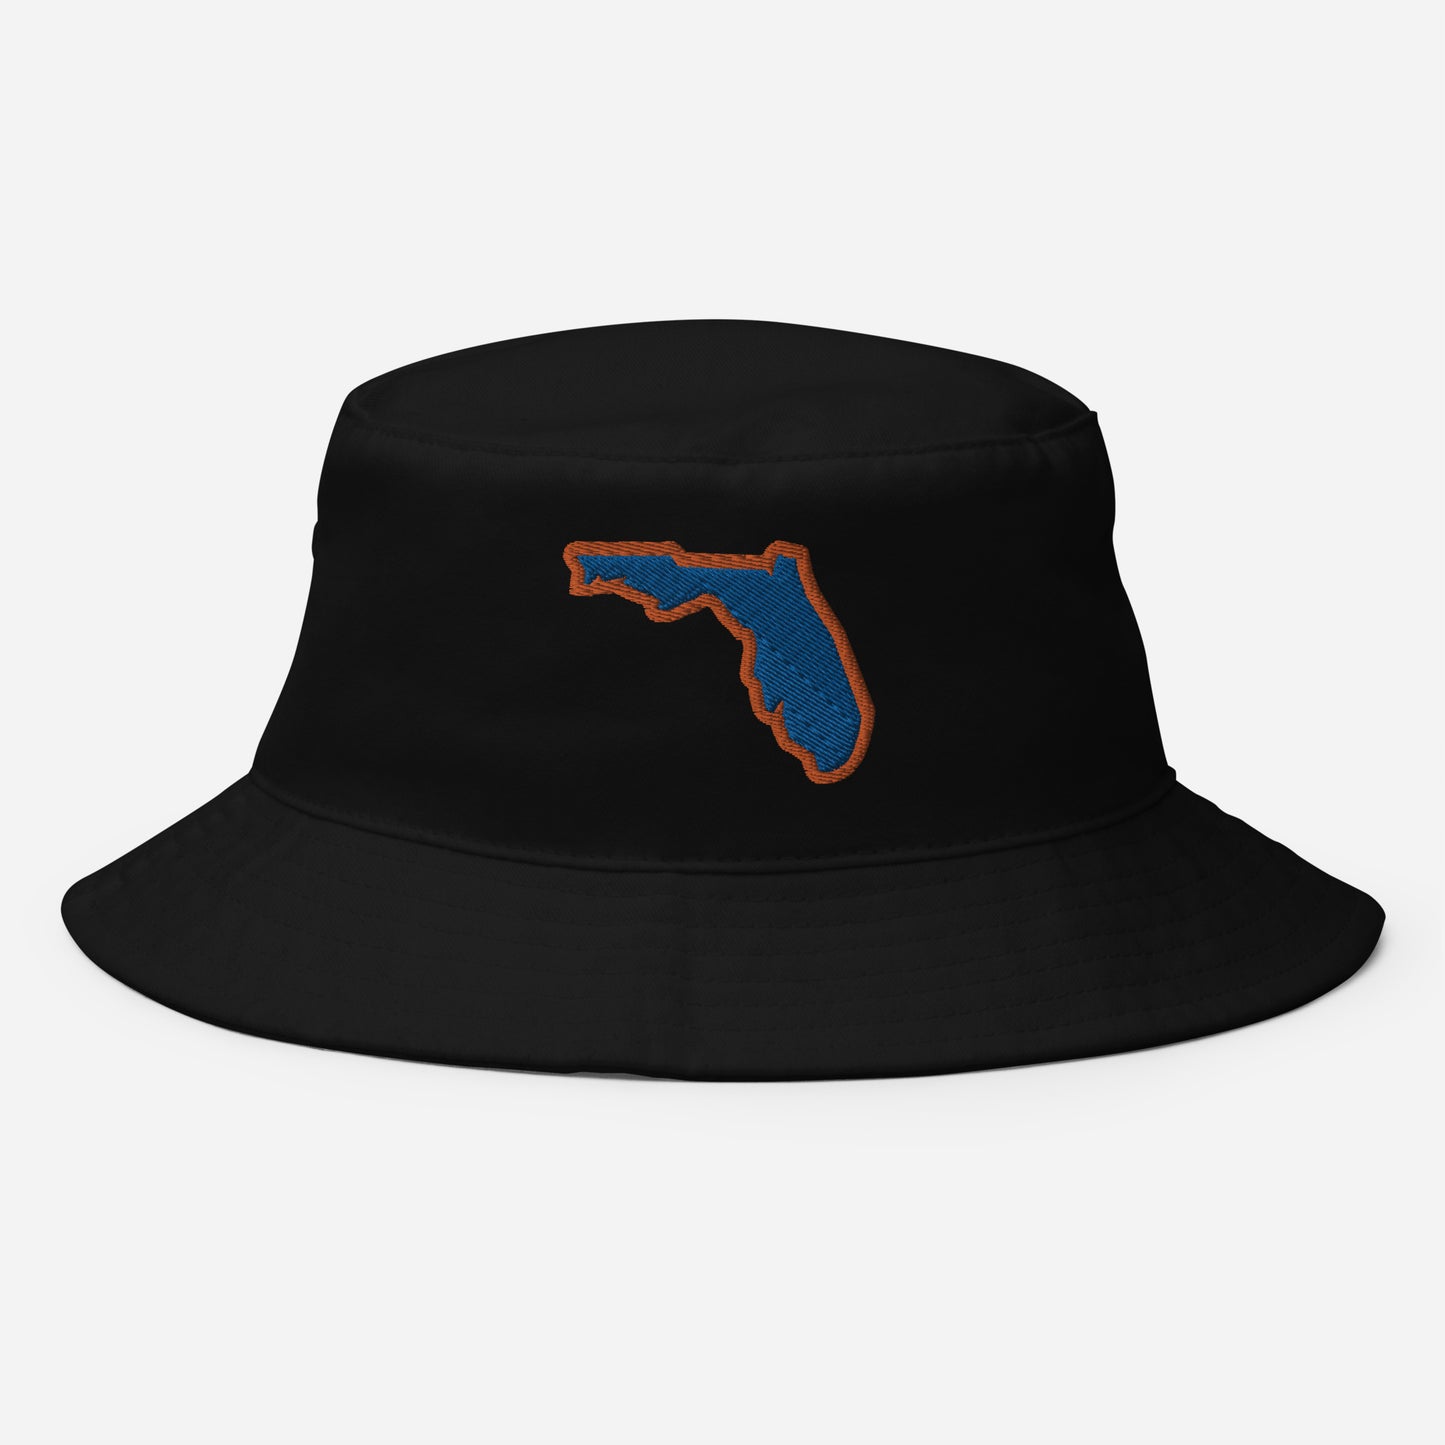 Gators Bucket Hat: State of Florida